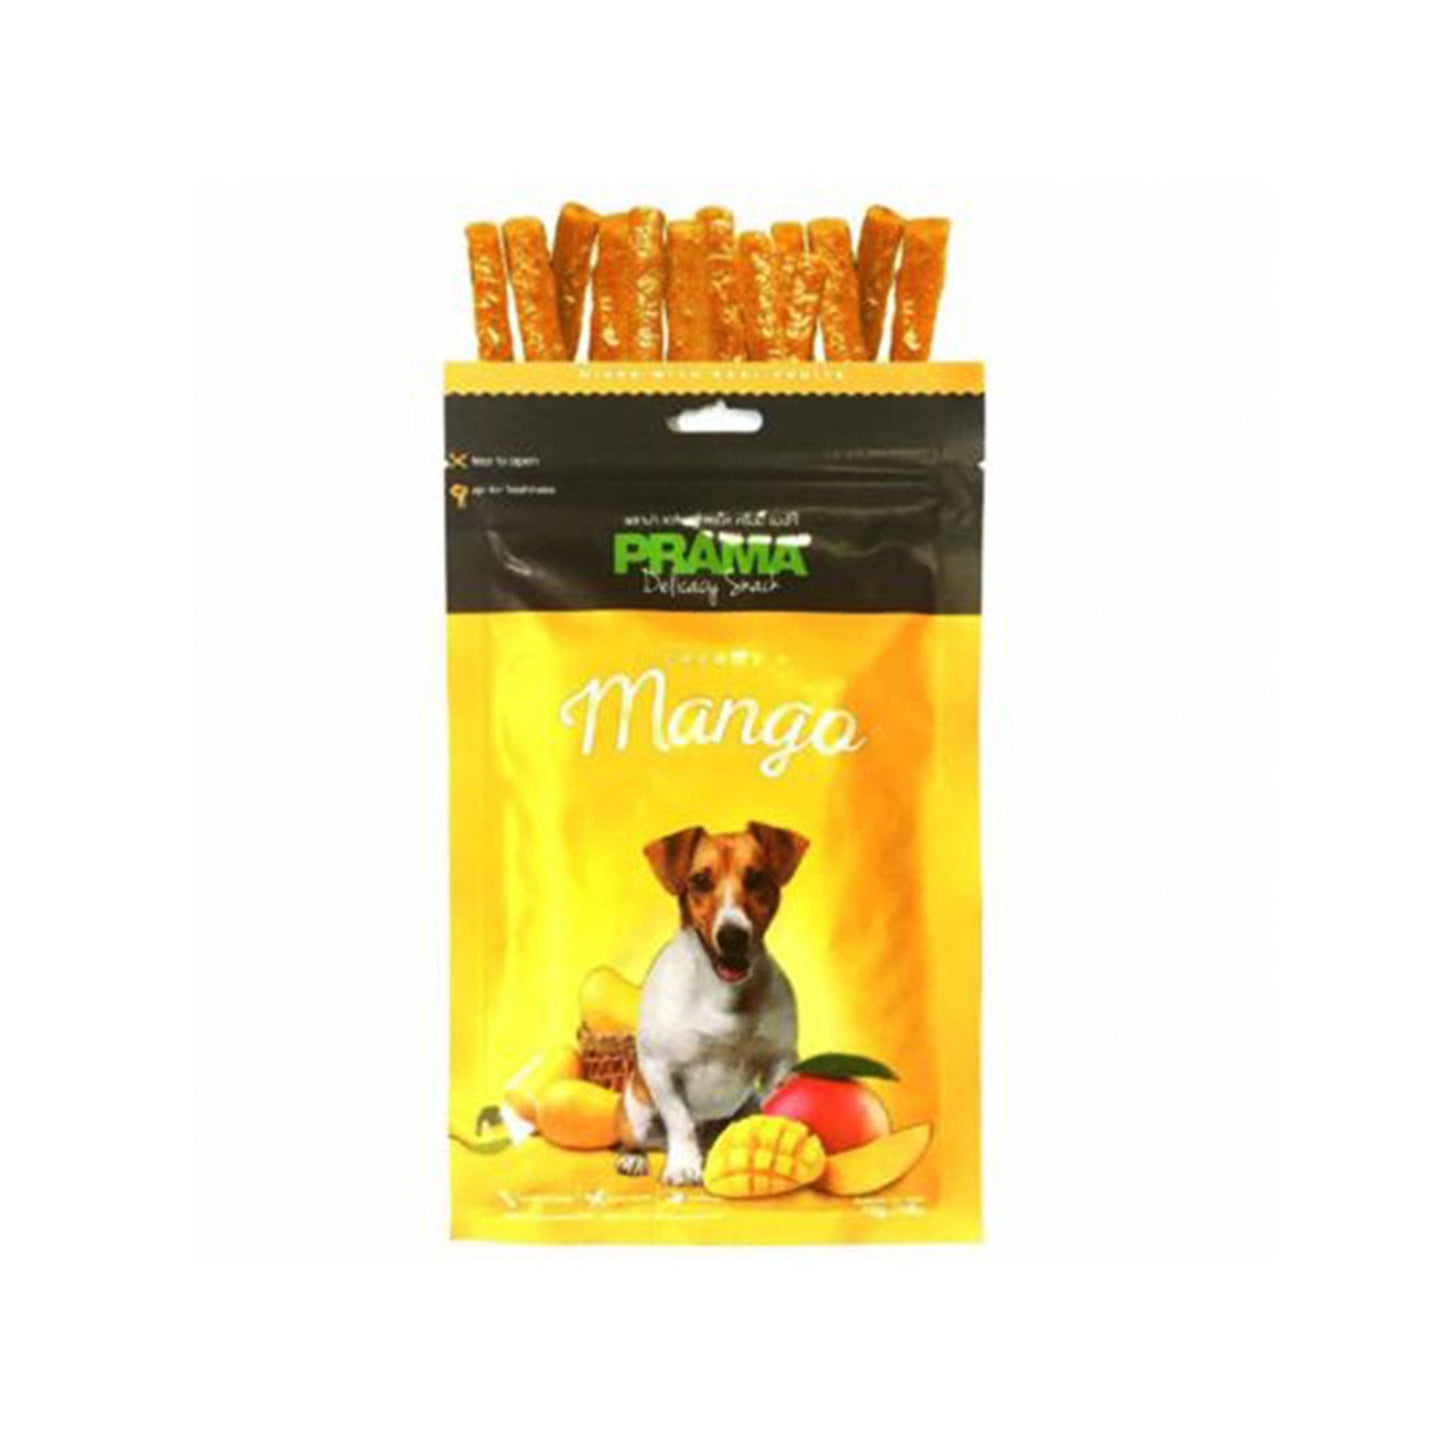 Prama - Creamy Mango Dog Treats (Pack of 6)